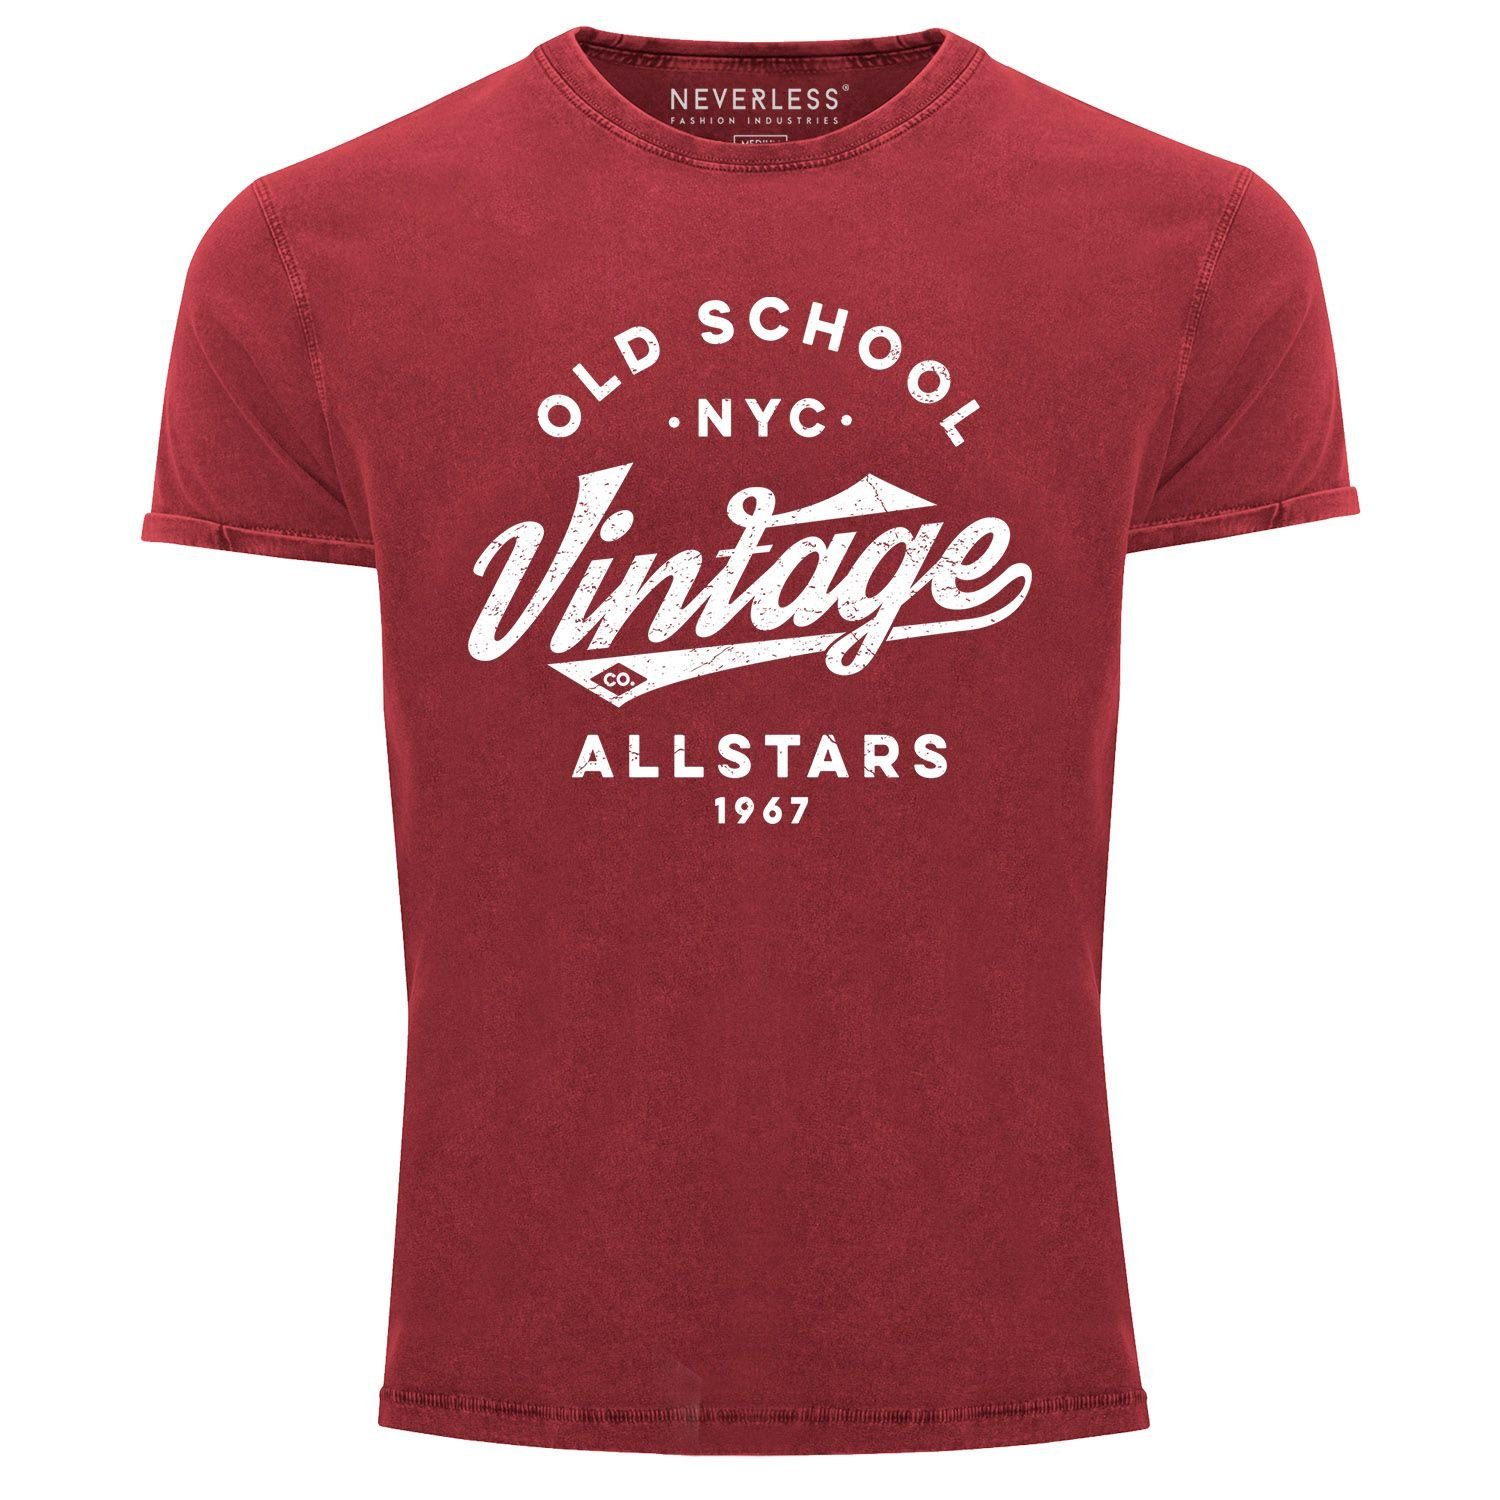 Neverless Print-Shirt Herren Vintage Shirt Retro Schriftzug Allstars Old School NYC Design Printshirt Used Look Slim Fit Neverless® mit Print rot